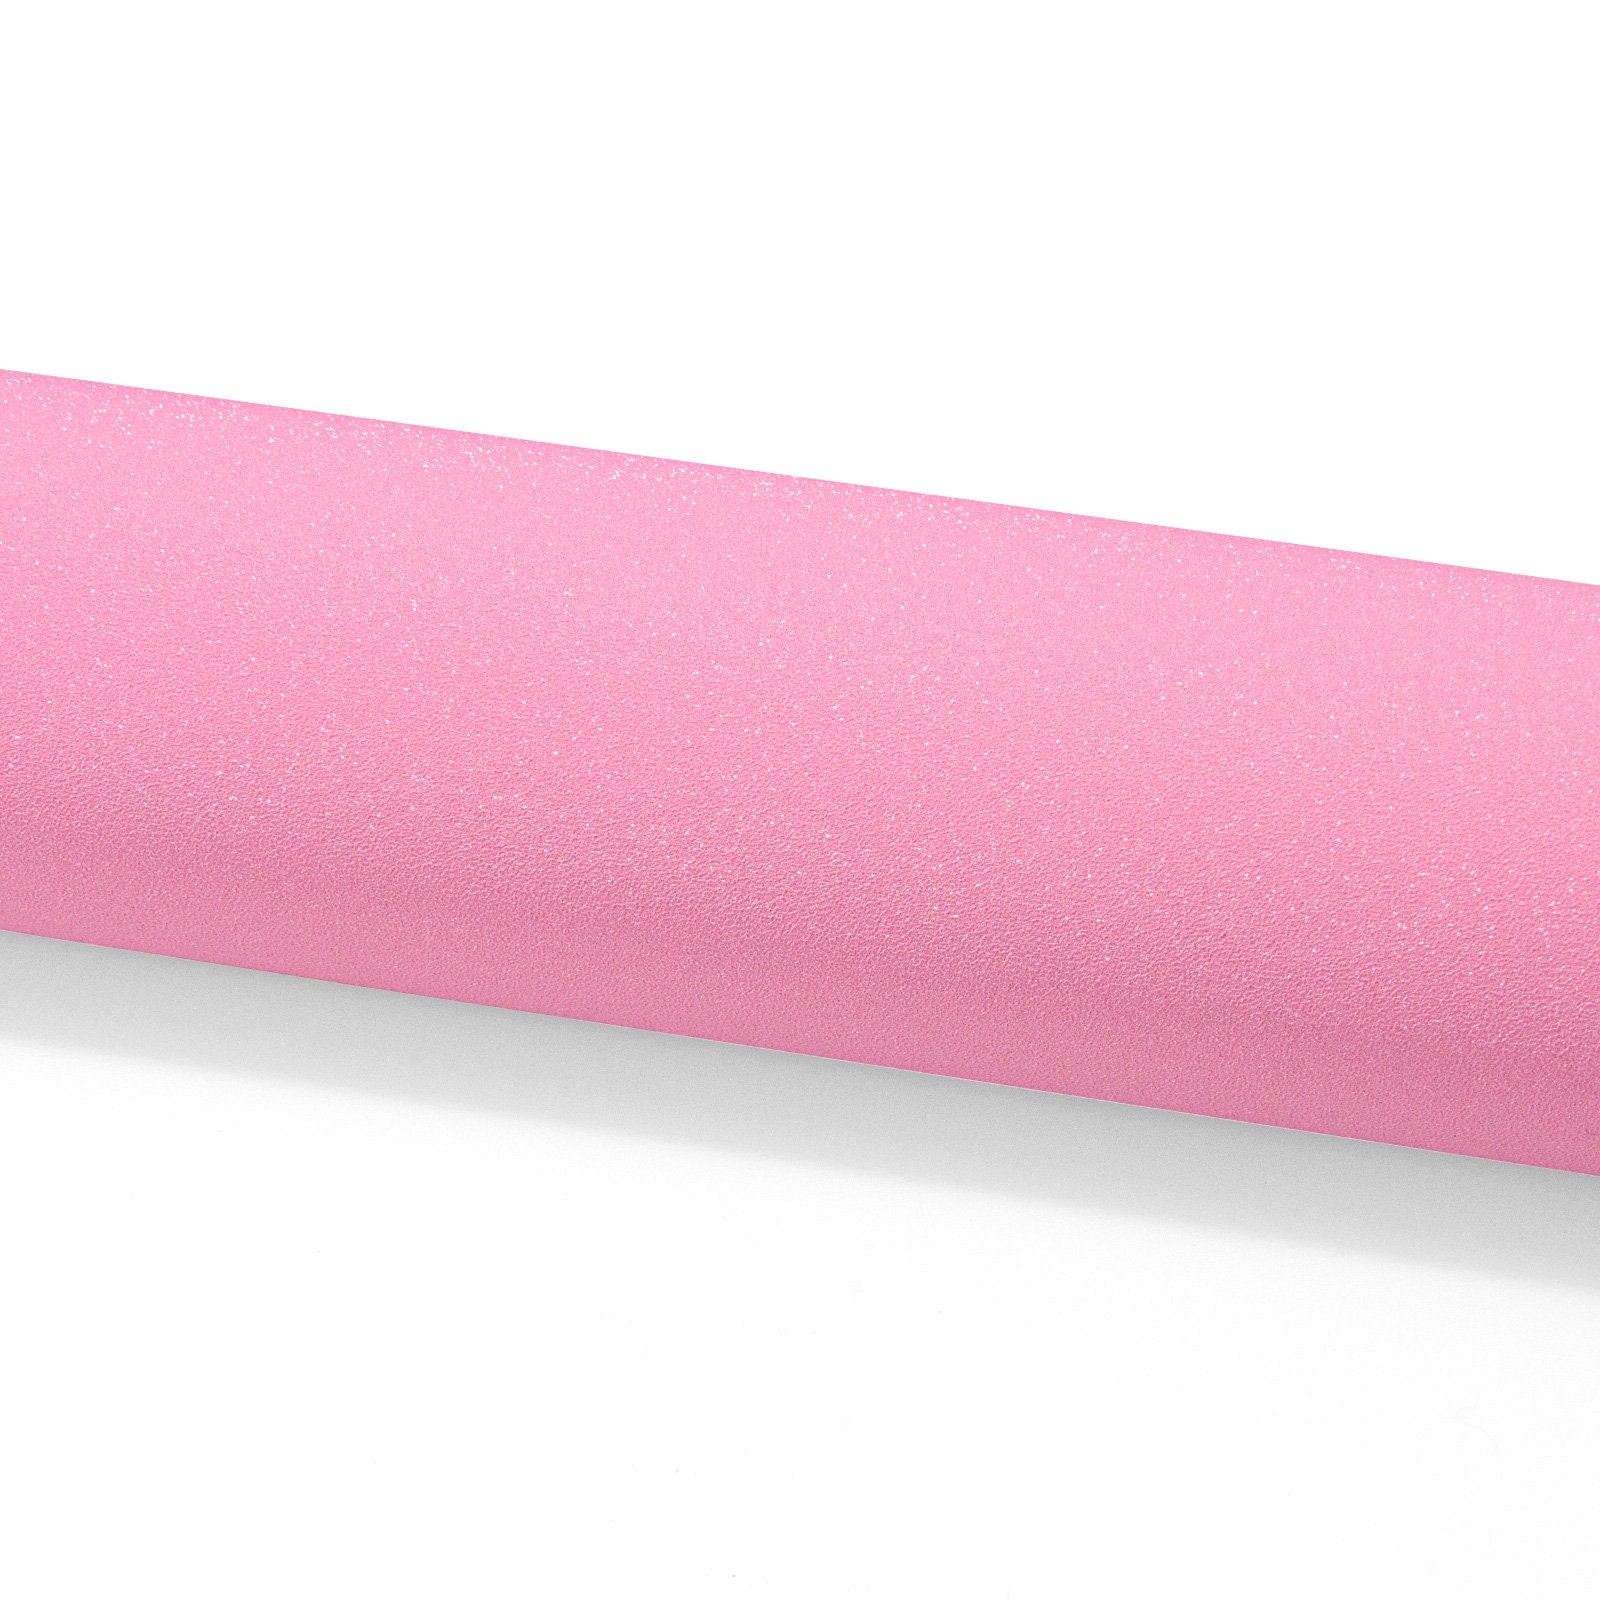 Matte Glitter Pink Texture Vinyl Wrap Sticker Decal Bubble Free Air Release  Car Vehicle DIY Film 